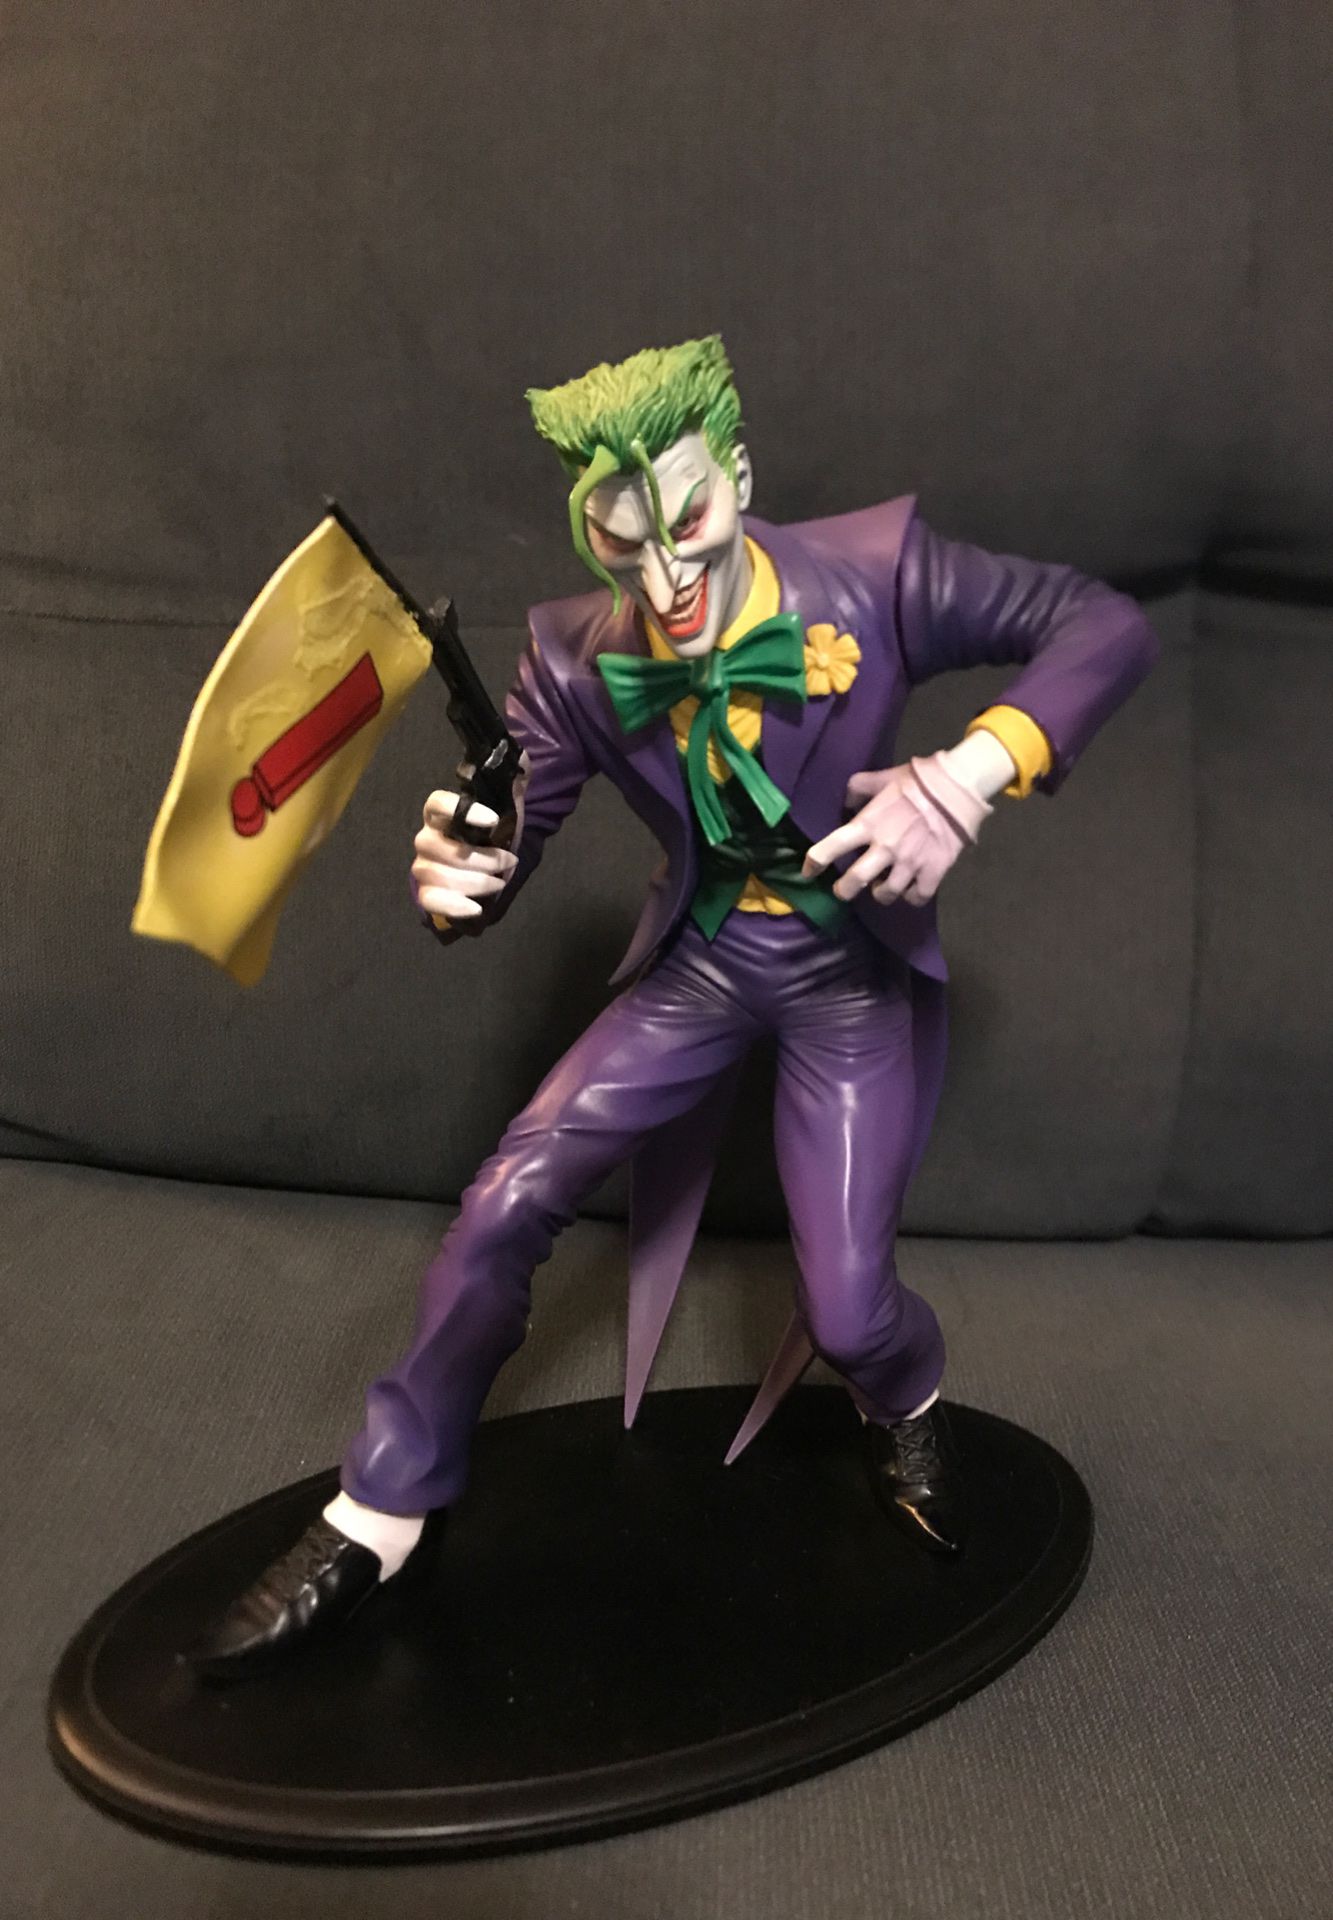 Joker Statue with bang gun